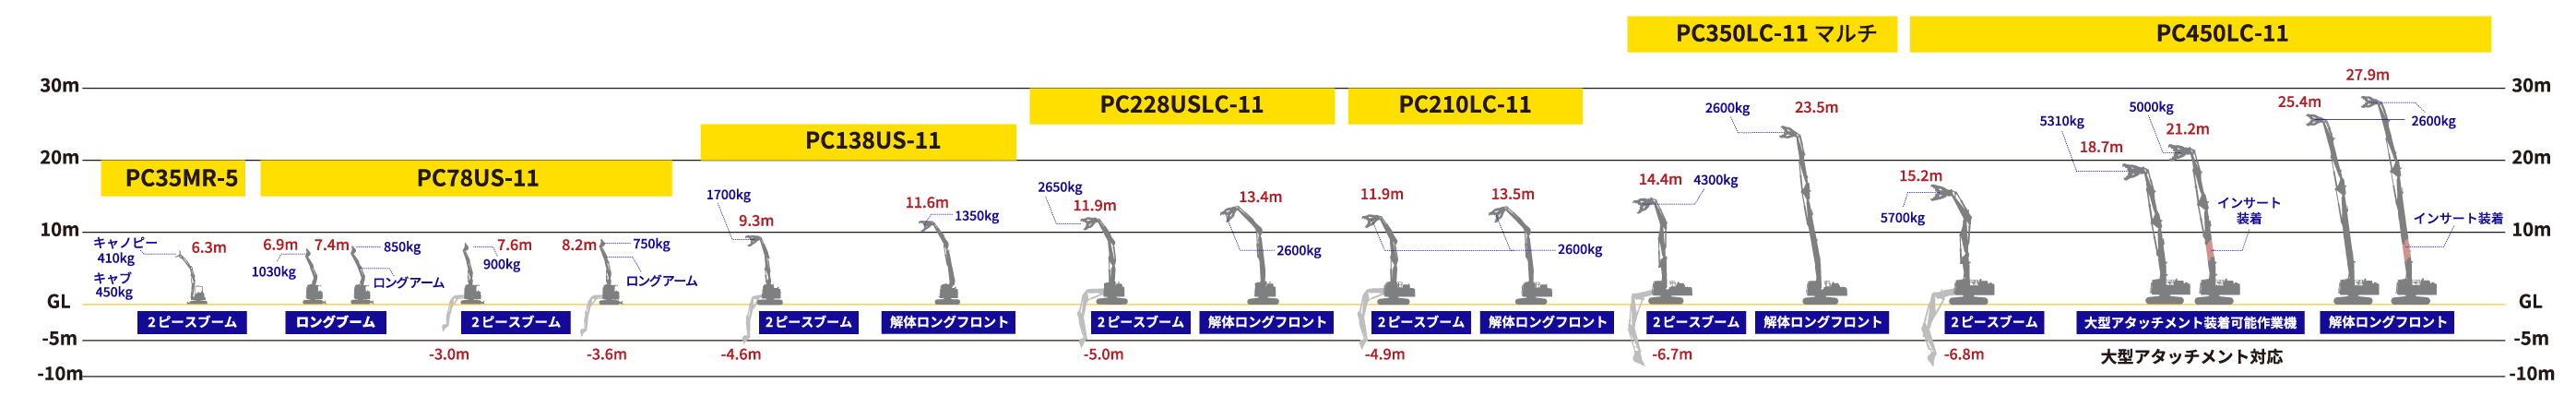 PC35MR-5 PC78US-11 PC138US-11 PC228USLC-11 PC210LC-11 PC350LC-11 マルチ PC450LC-11